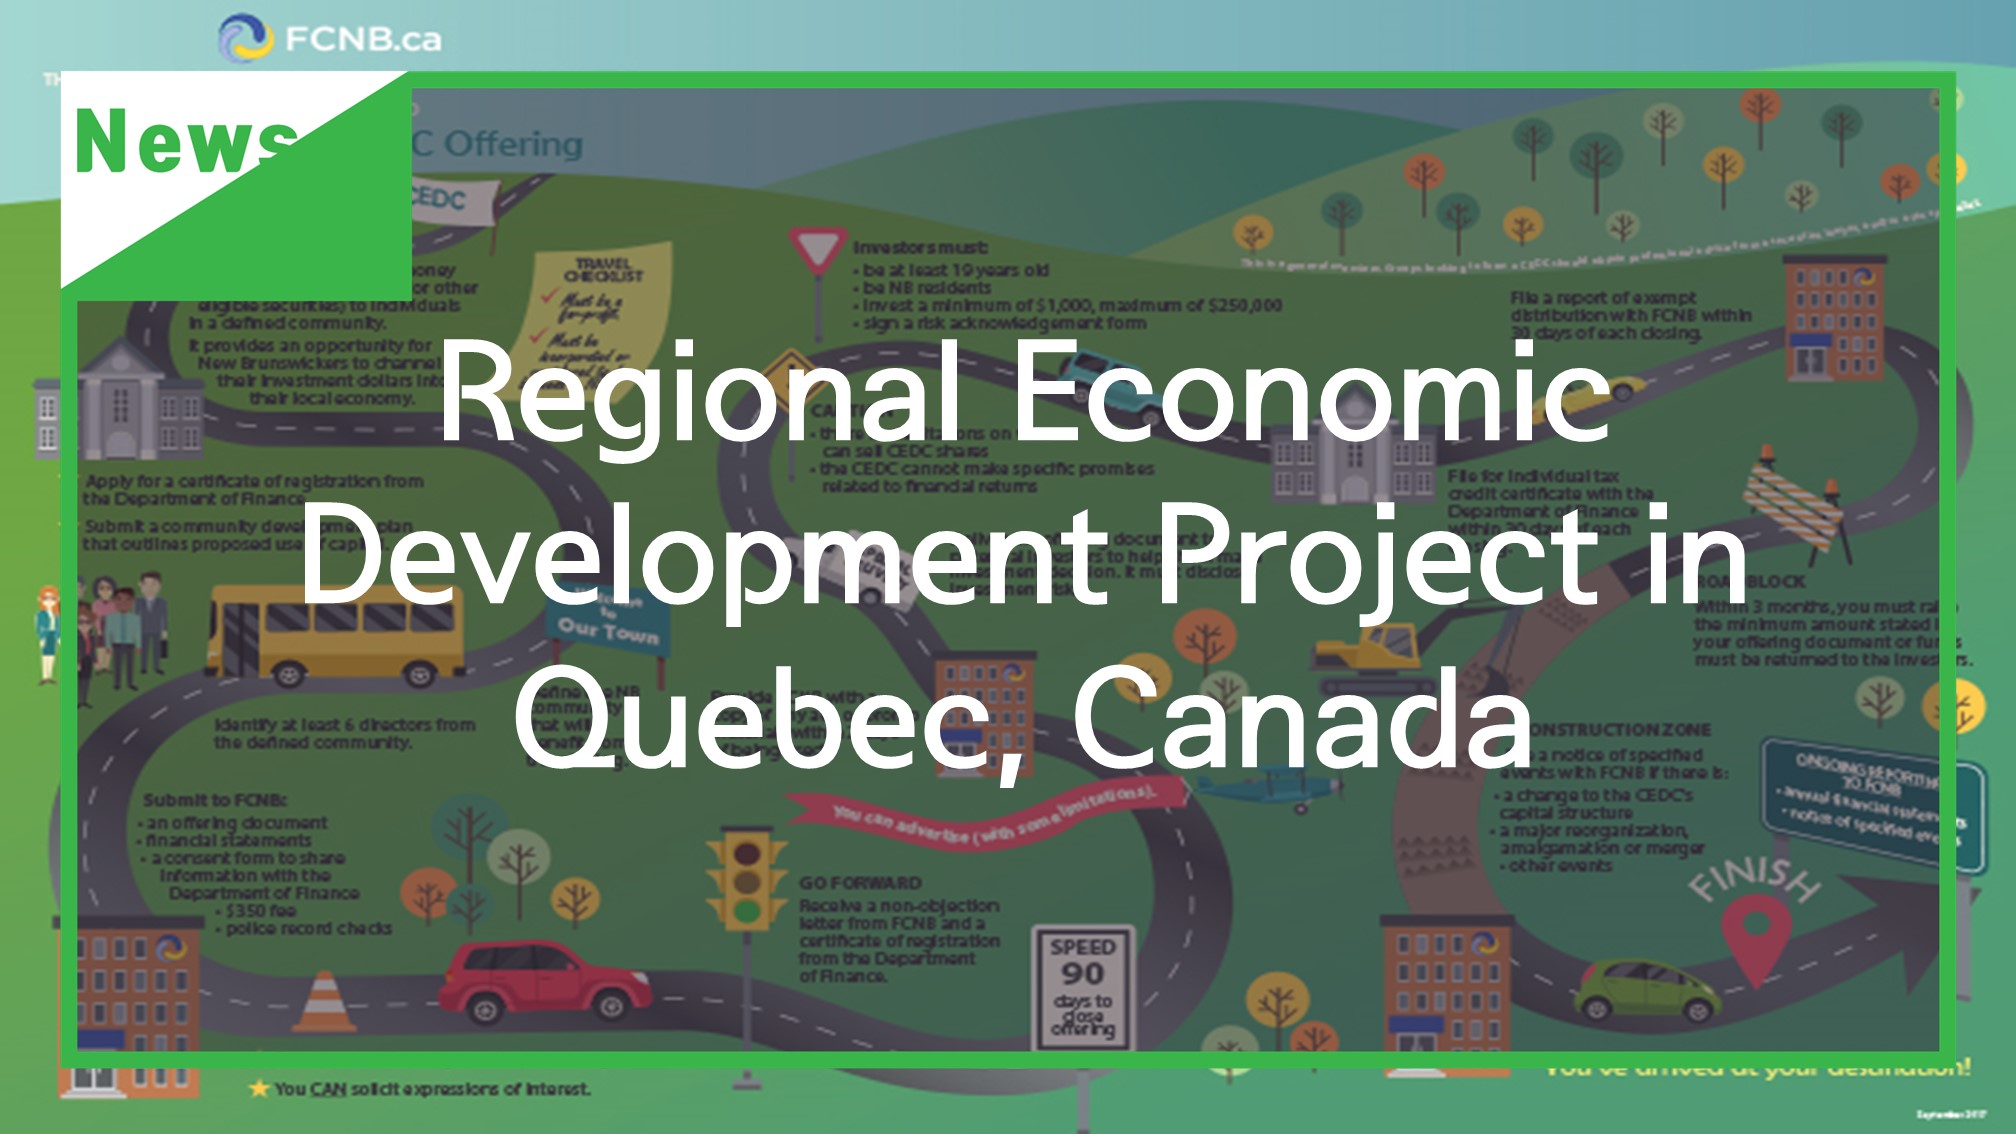 [News] Regional Economic Development Project in Quebec, Canada